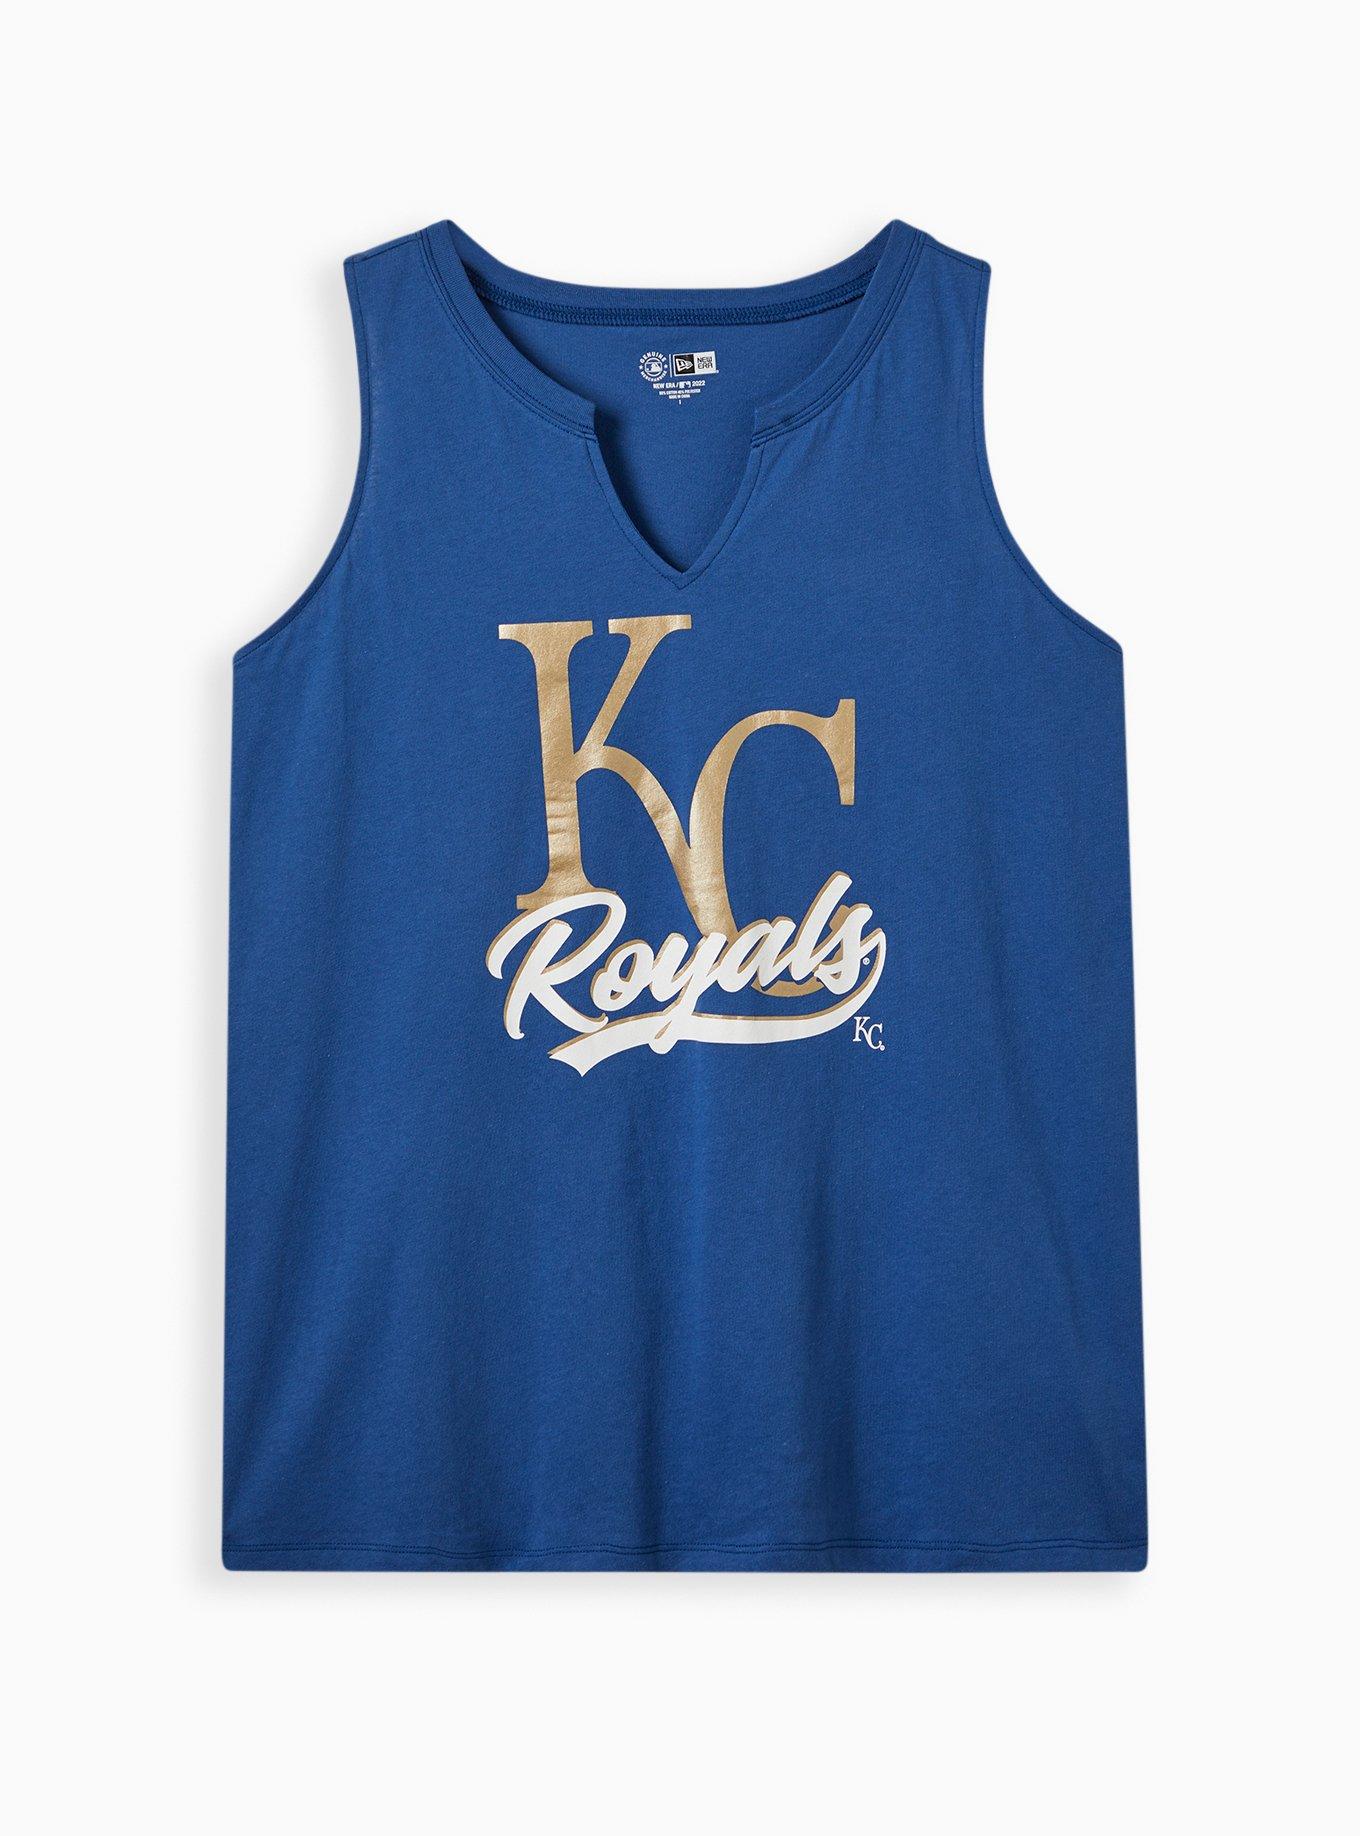 MLB Kansas City Royals Cotton Fabric